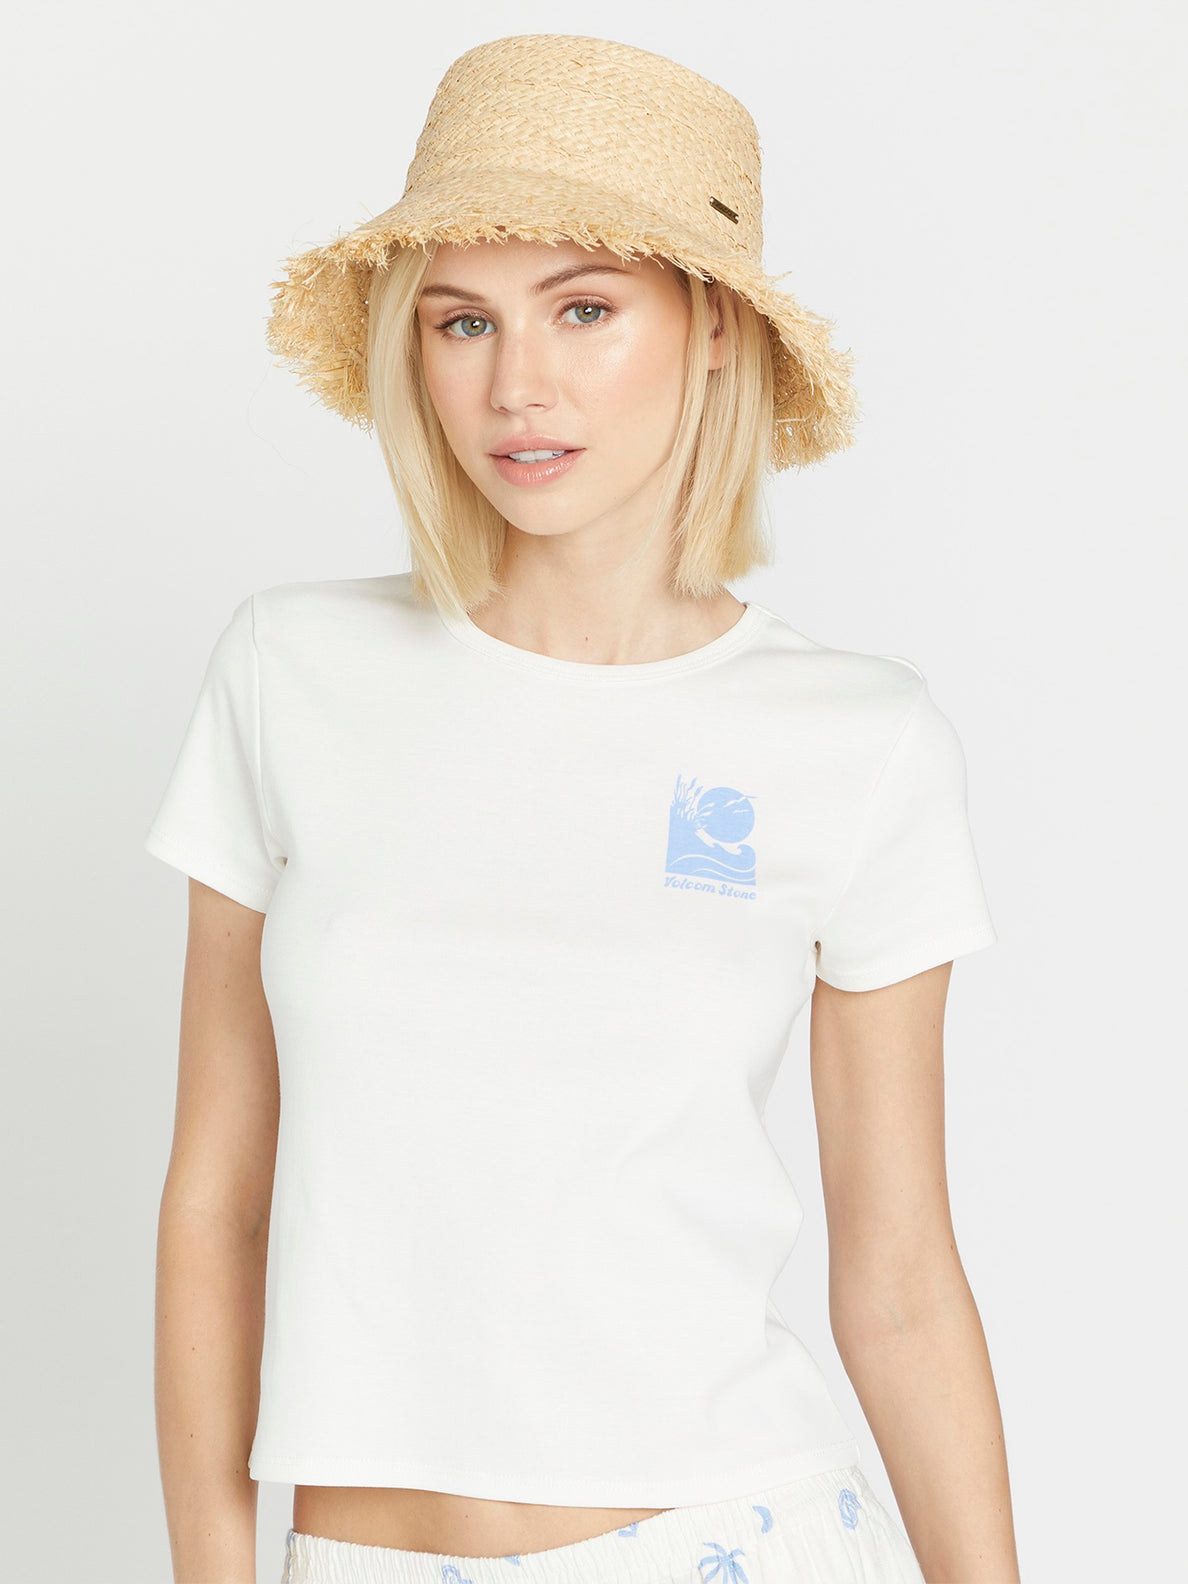 Sunny Bucket Straw Hat - Natural